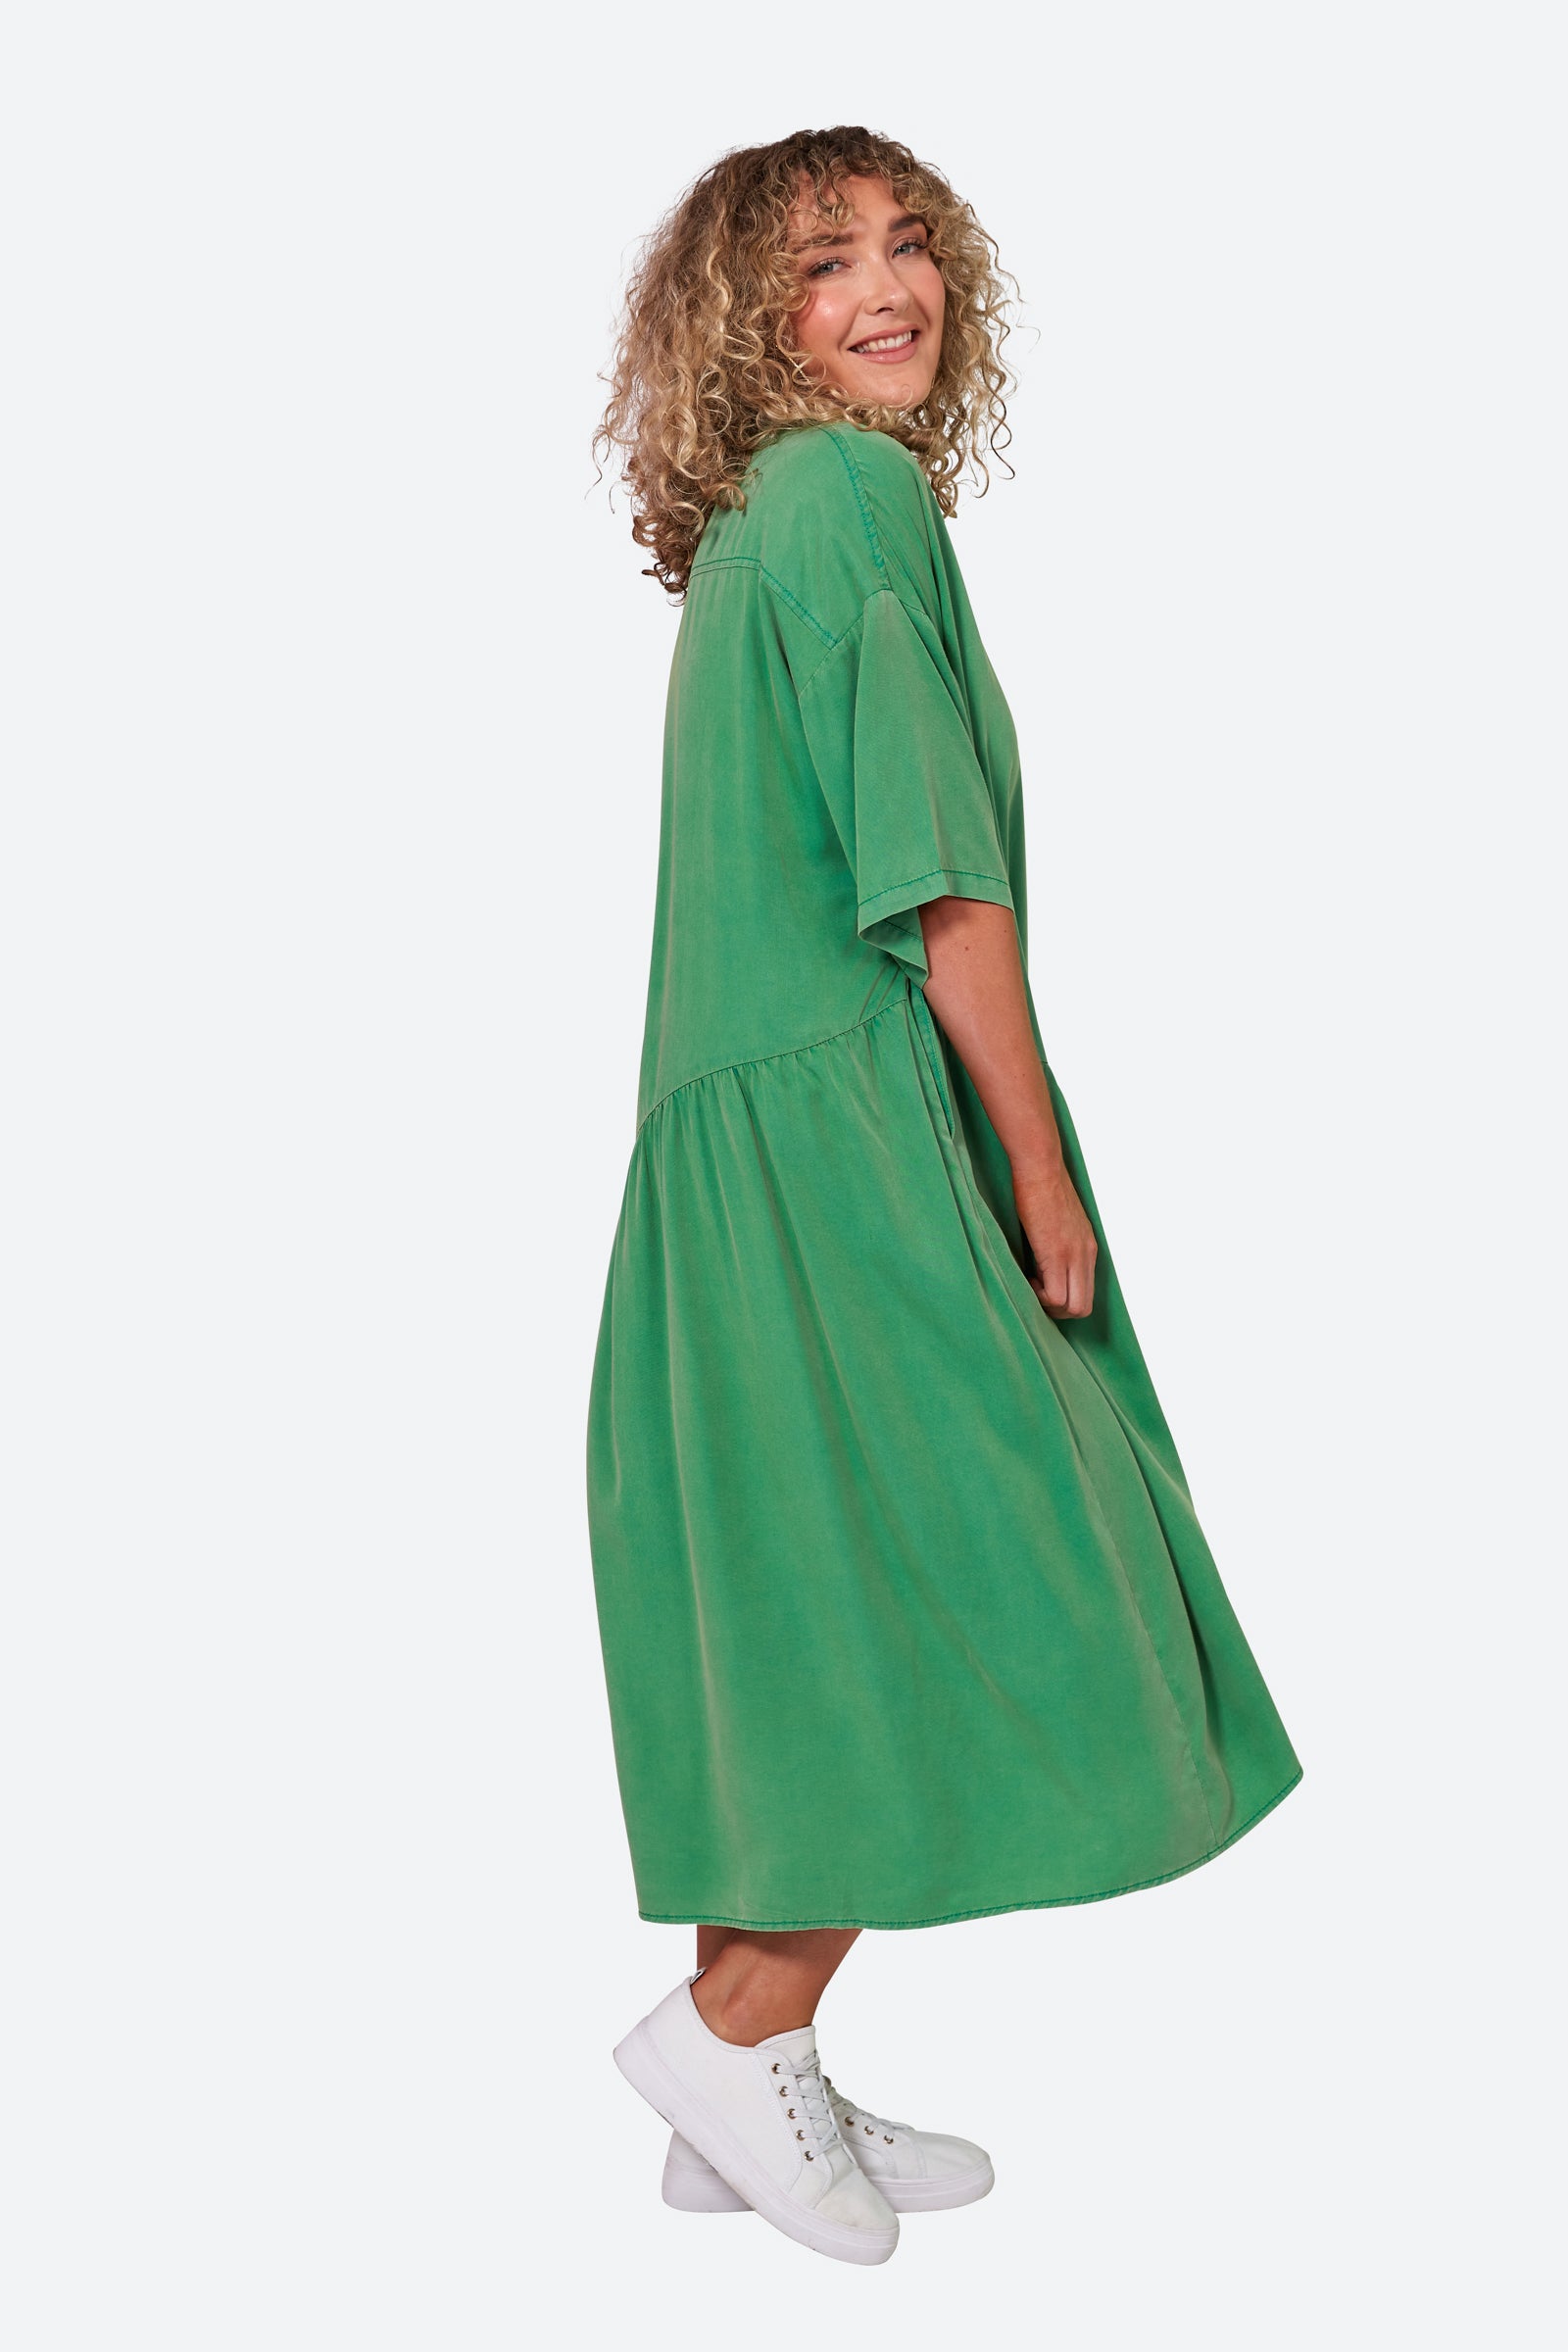 Elan Shirt Dress - Meadow - eb&ive Clothing - Shirt Dress One Size